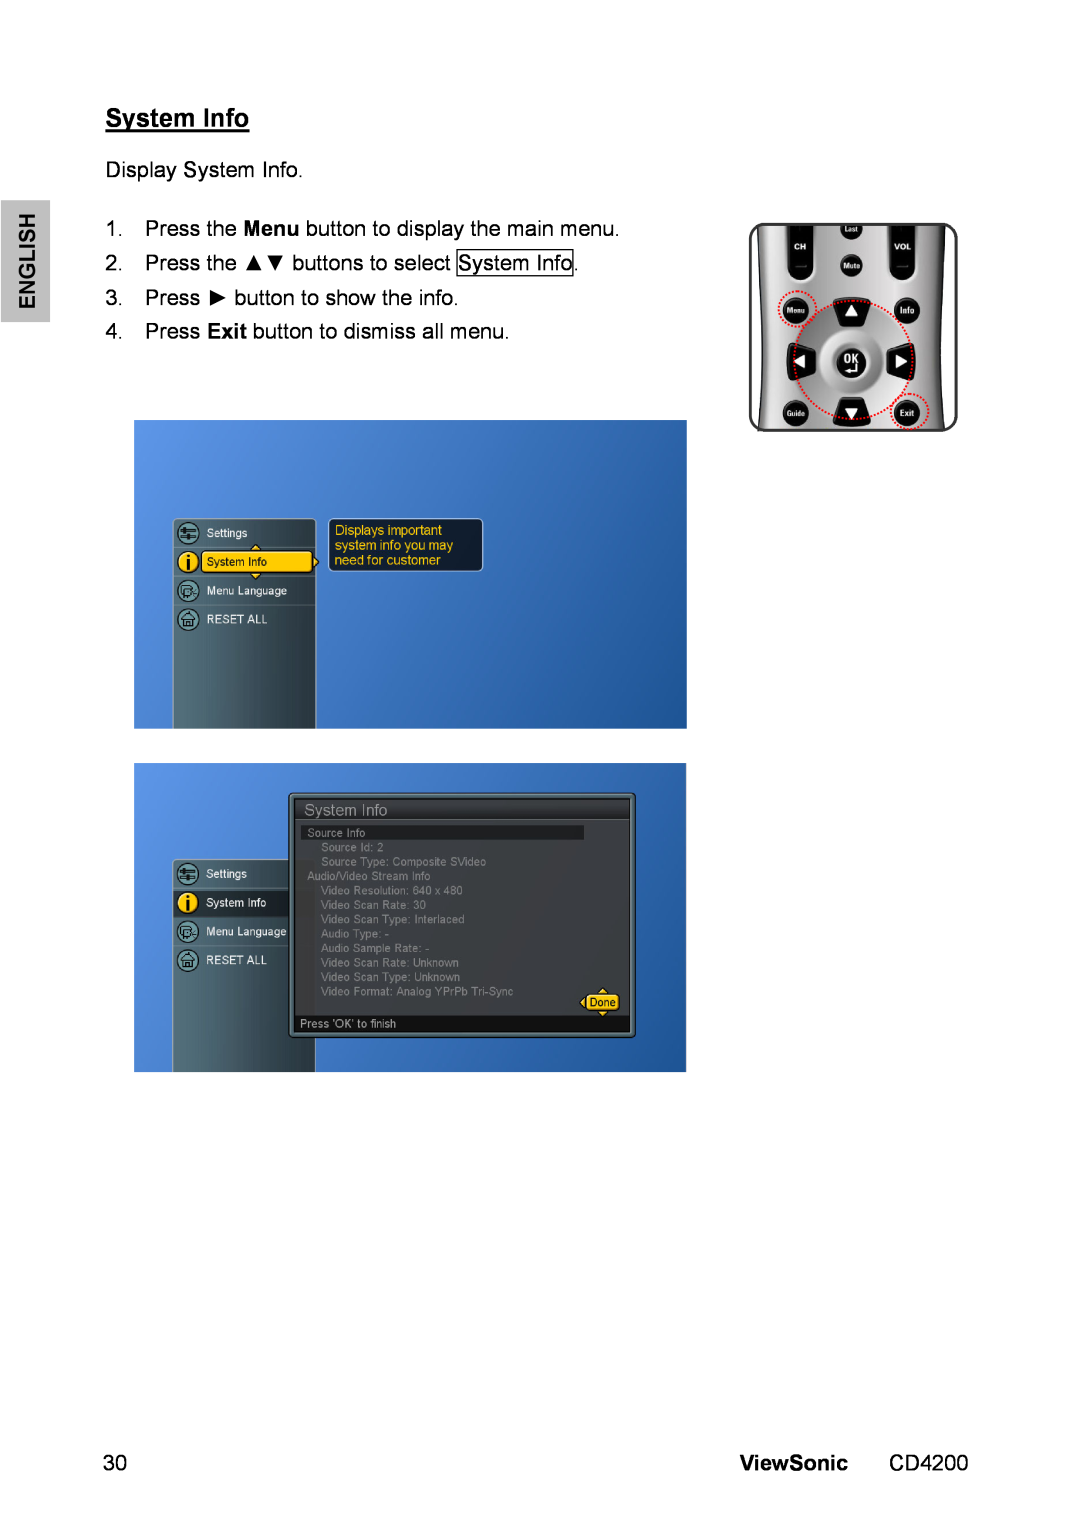 ViewSonic manual English, Display System Info 1. Press the Menu button to display the main menu, ViewSonic CD4200 